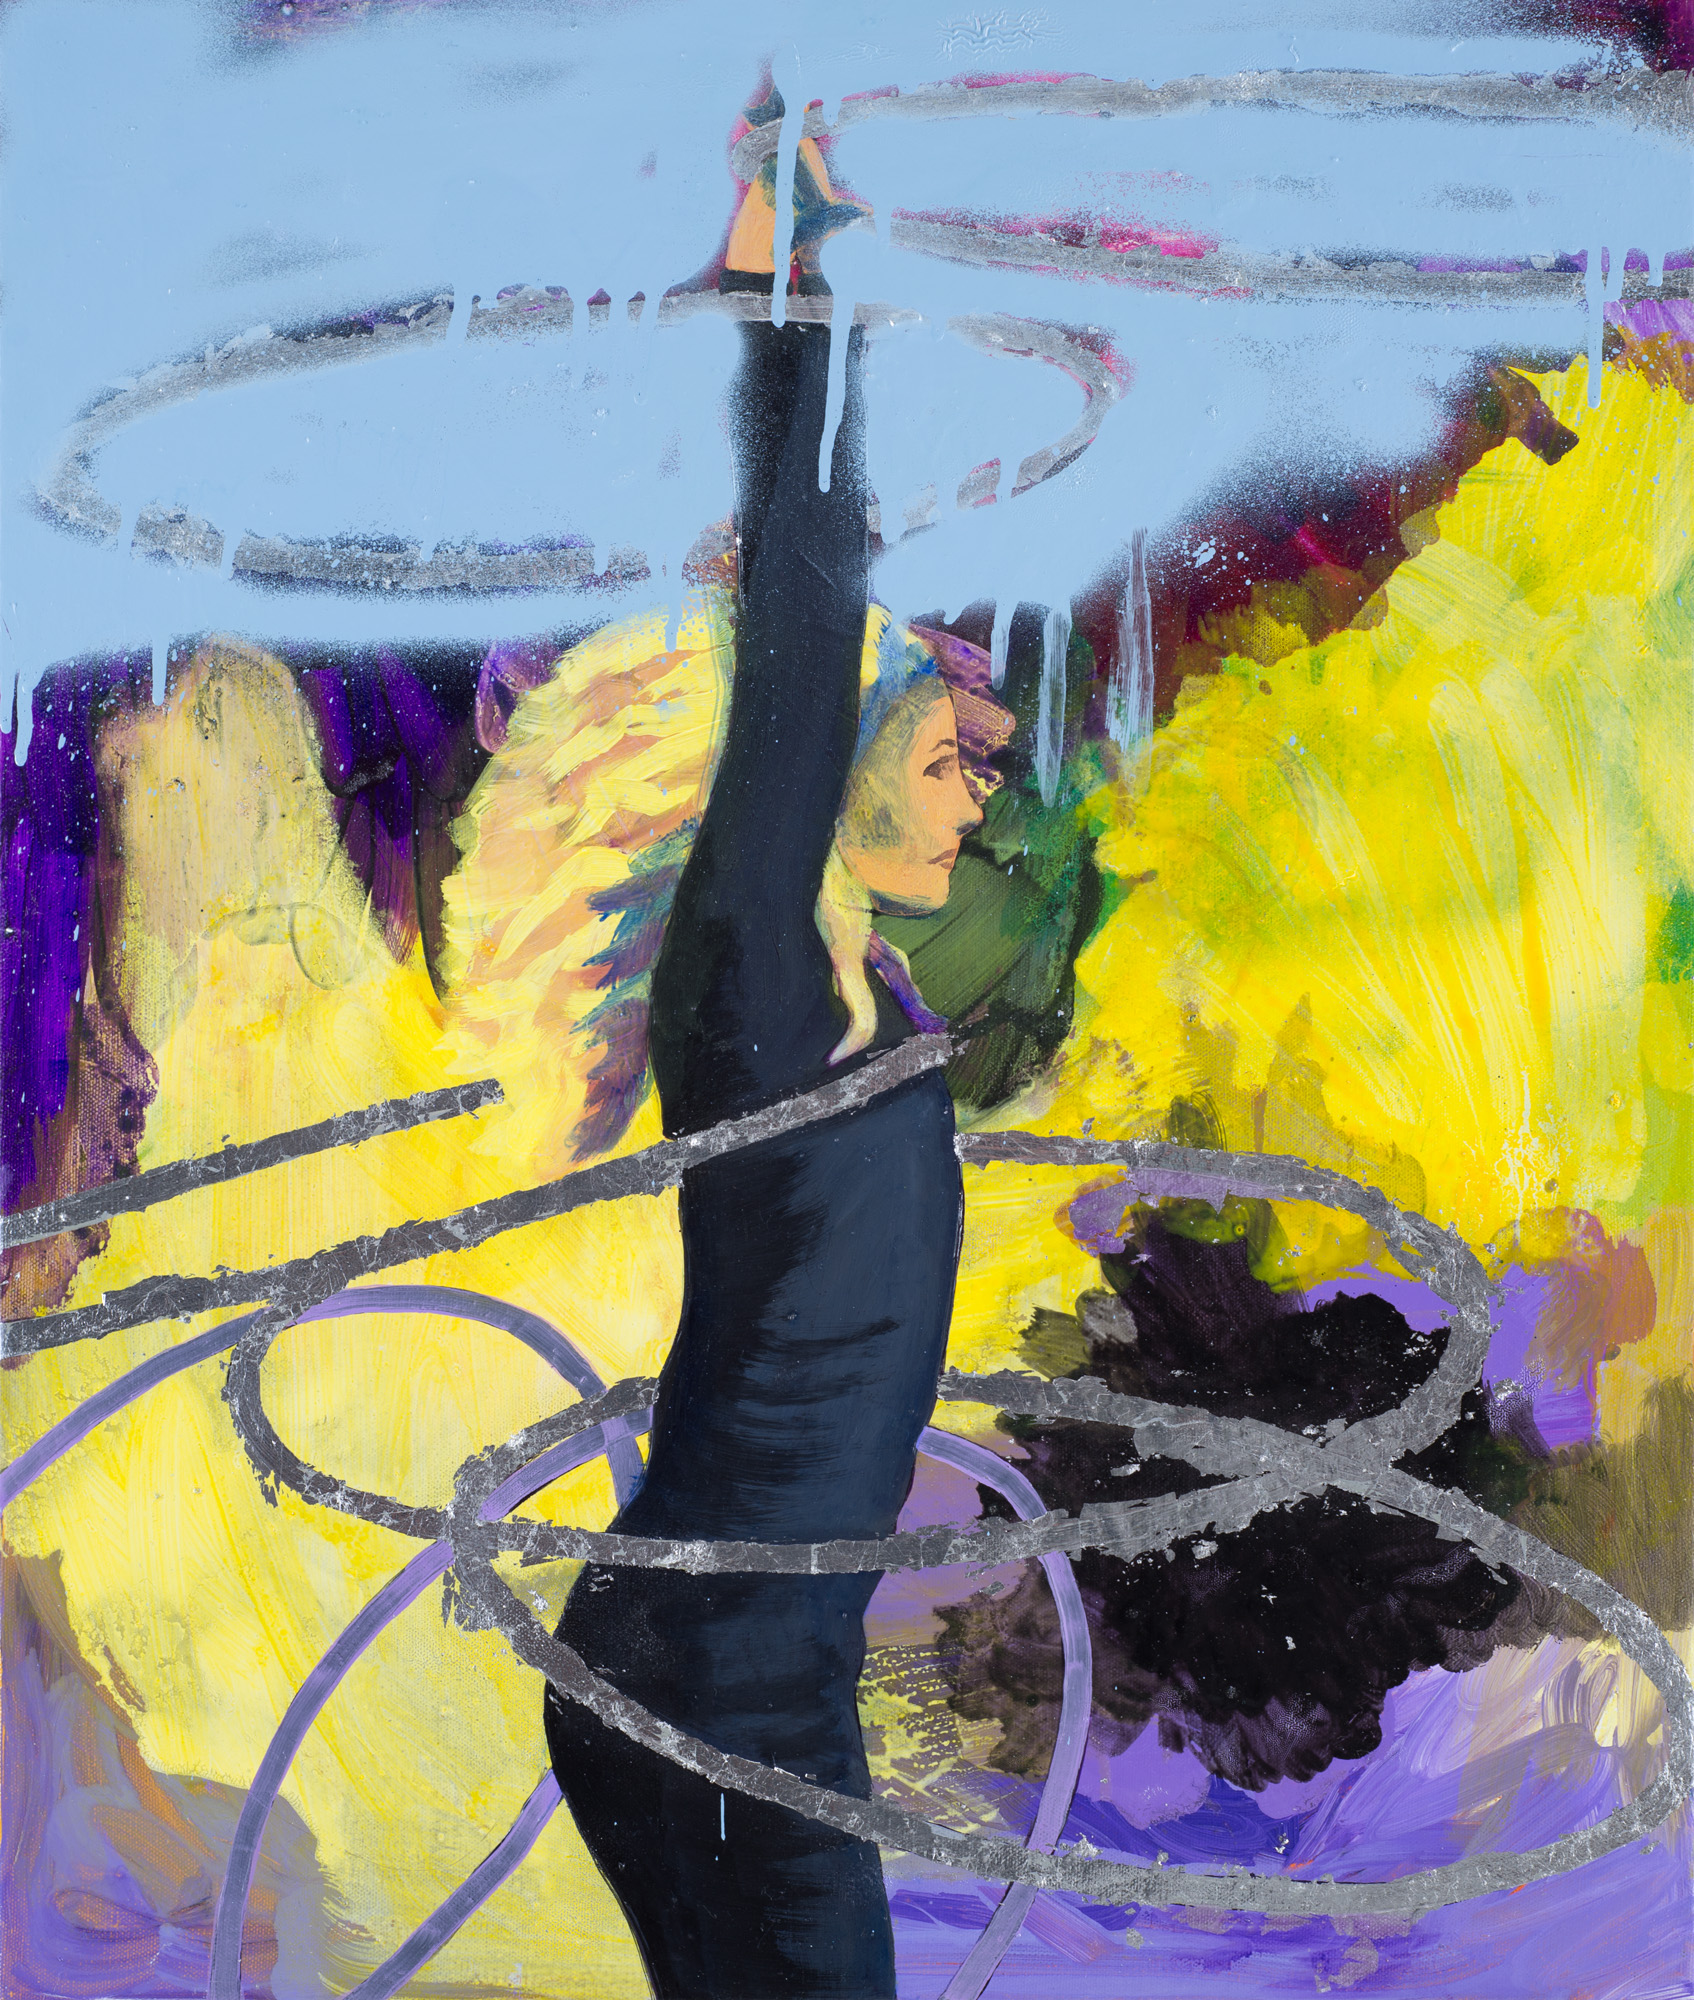   Hoop Dancer study I   2016 oil, spray paint and metal leaf on canvas 61 x 51cm 